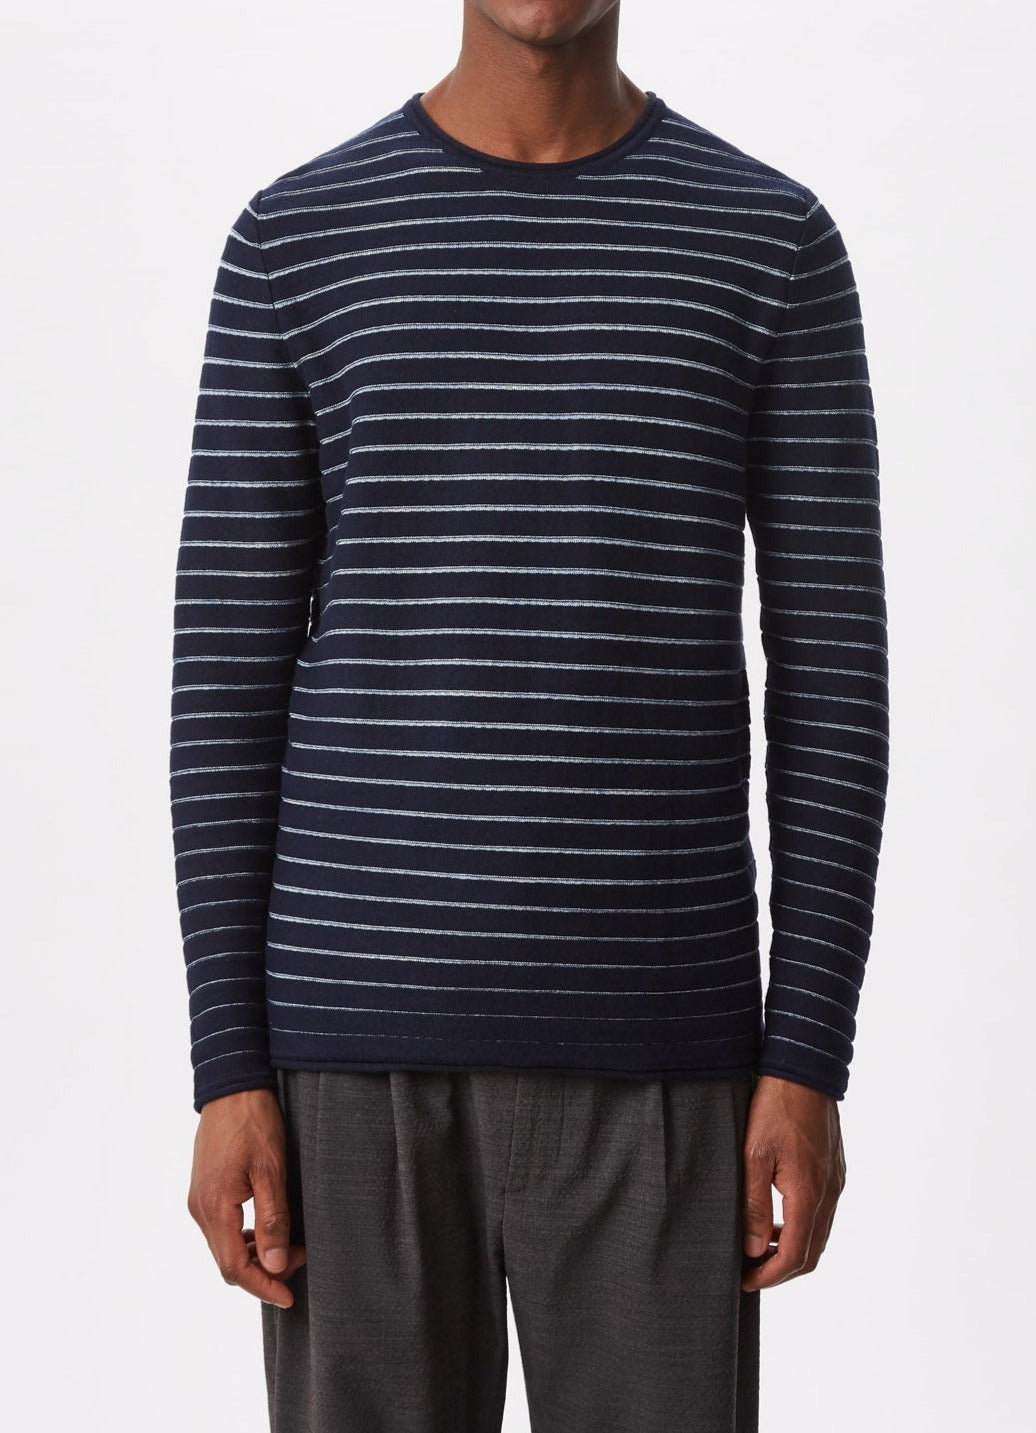 Men Jersey | Navy Blue Organic Cotton Striped Sweater by Spanish designer Adolfo Dominguez